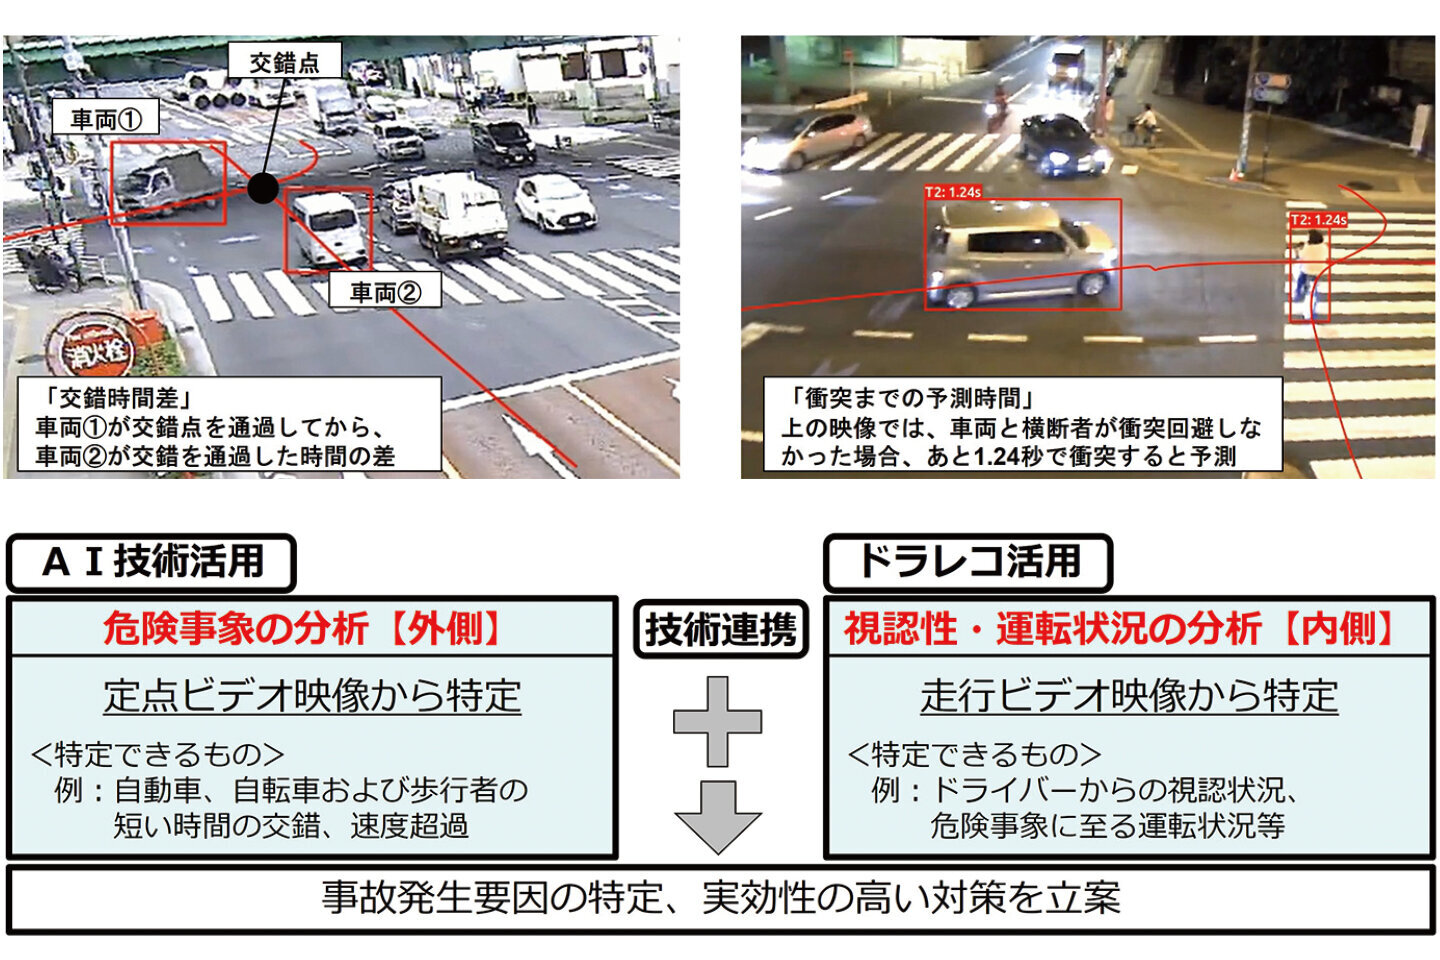 AI技術を活用した交通事故分析手法